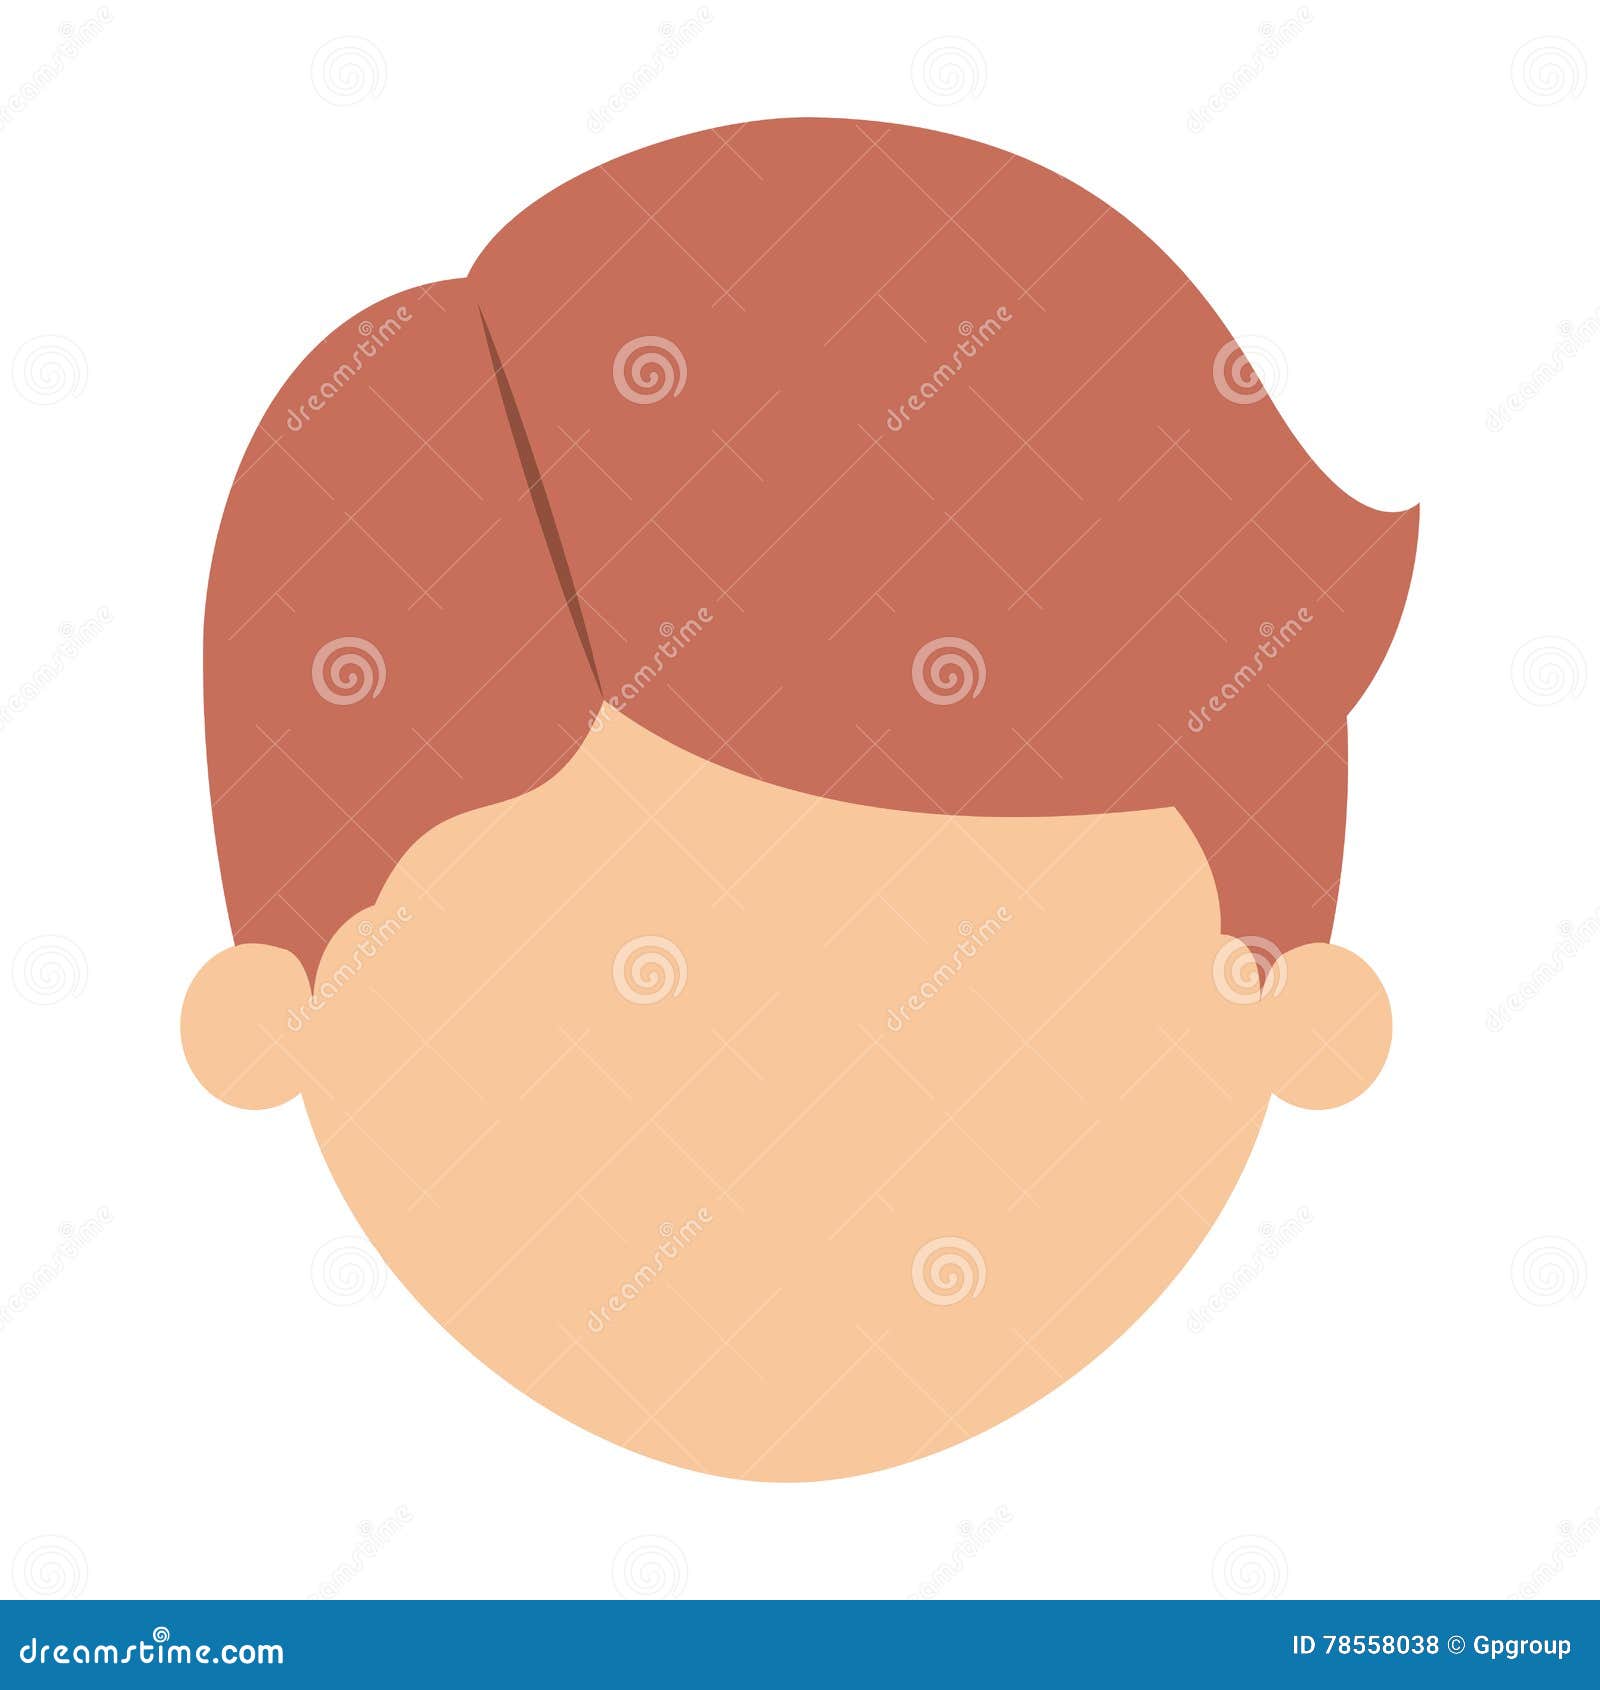 Boy cartoon head design stock vector. Illustration of casual - 78558038